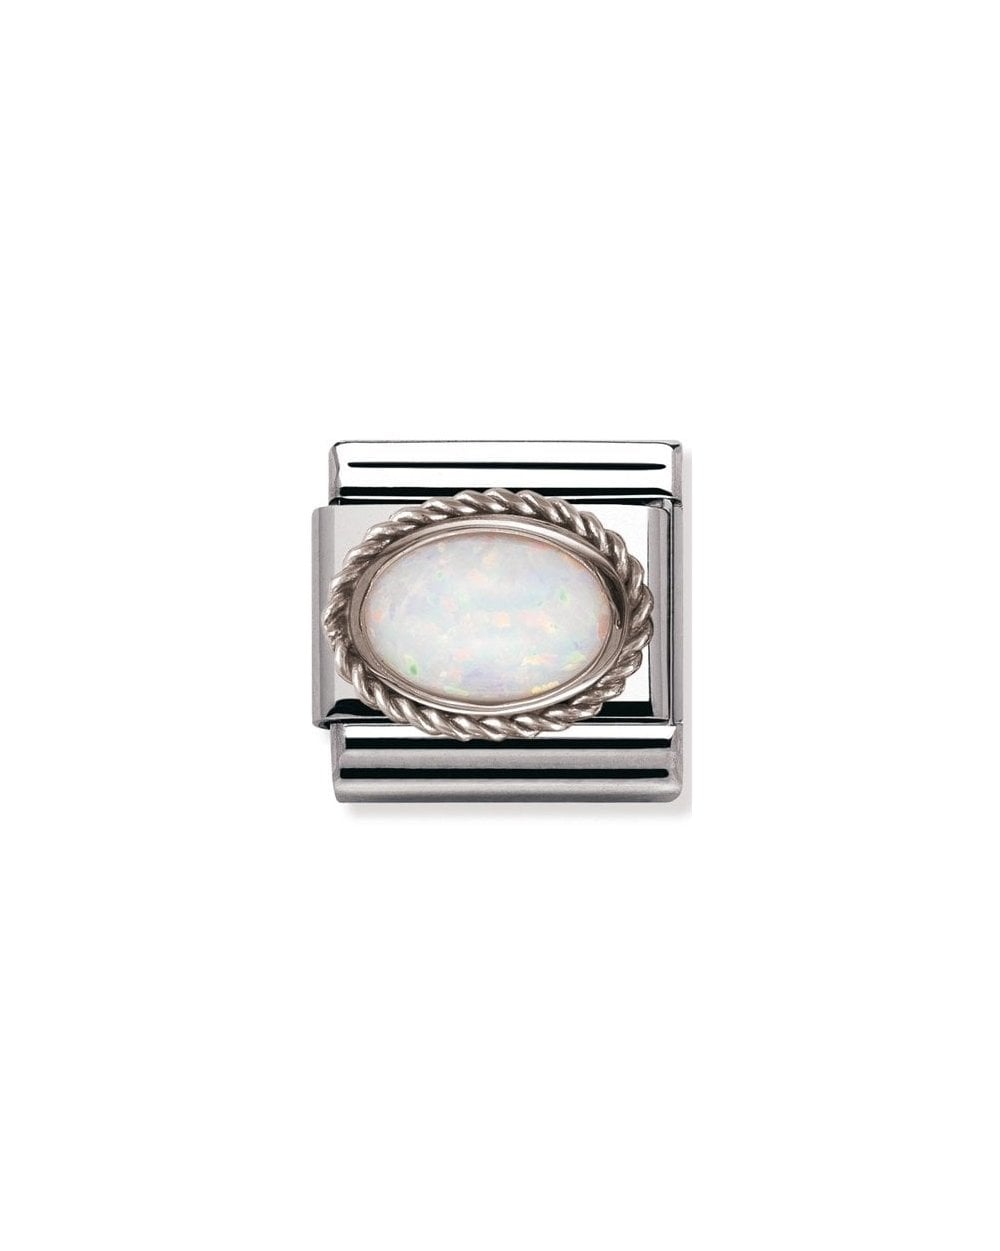 Classic Silvershine Ornate Settings White Opal Charm